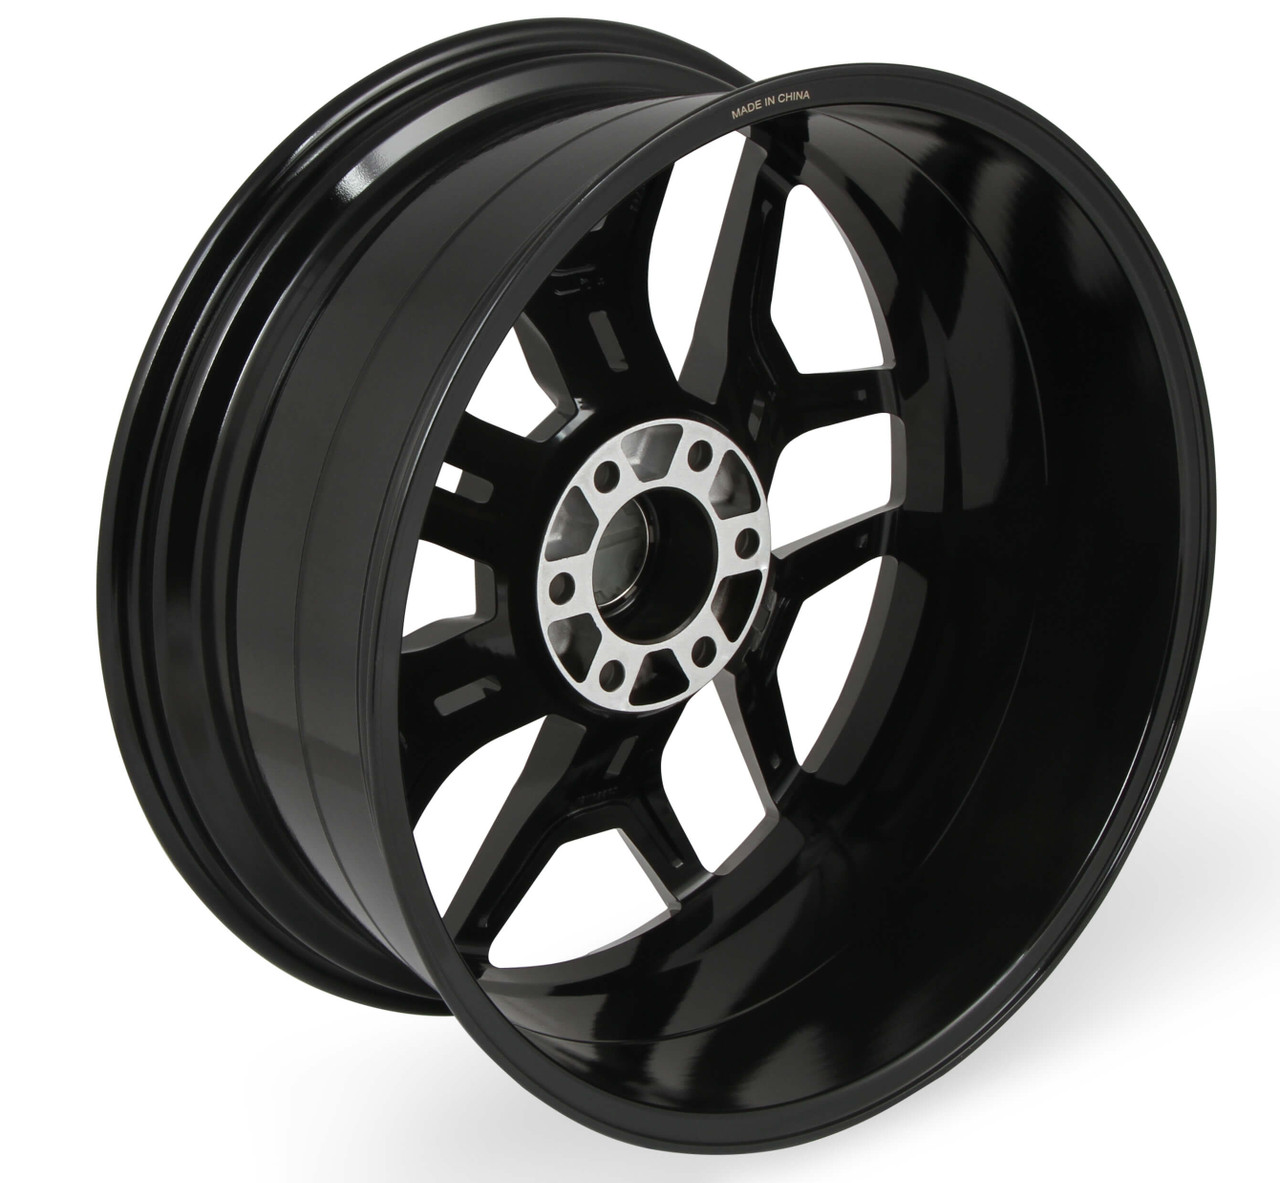 CS45-395512-B Carroll Shelby Wheels 22x9.5in 6 x 135 12mm Offset Gloss Black